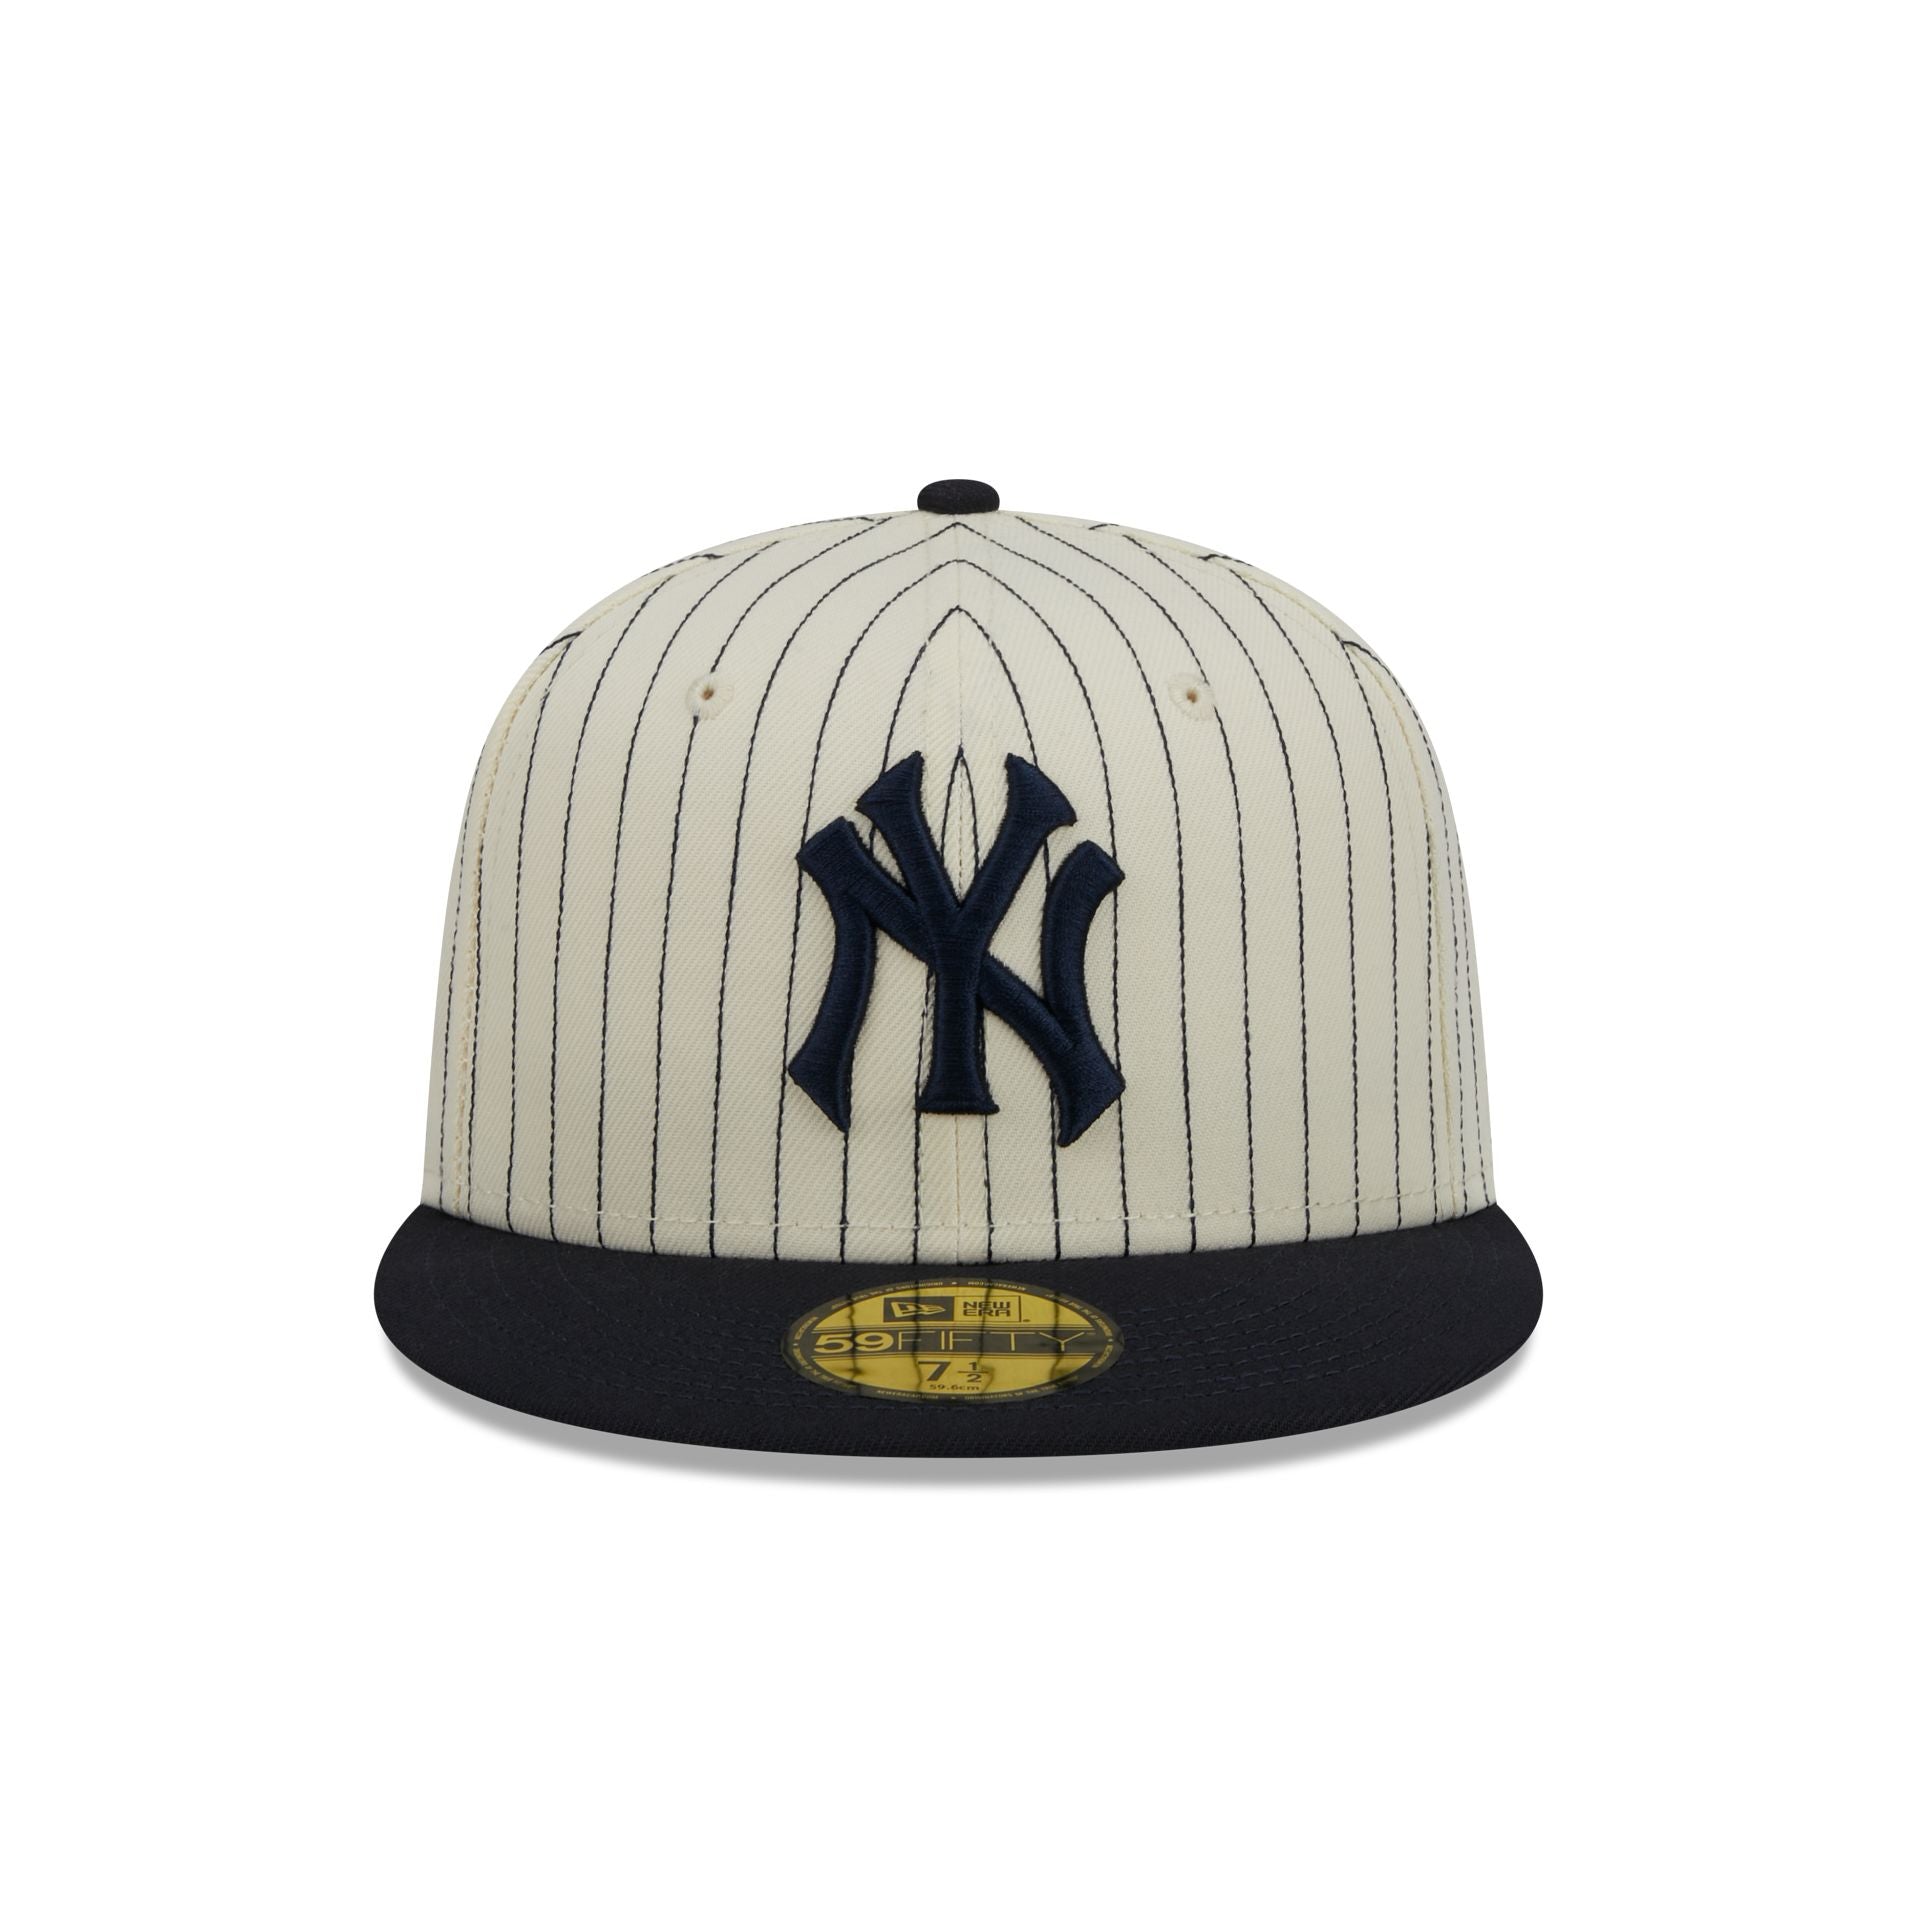 Yankees Era Caps New New – Hats Cap & York